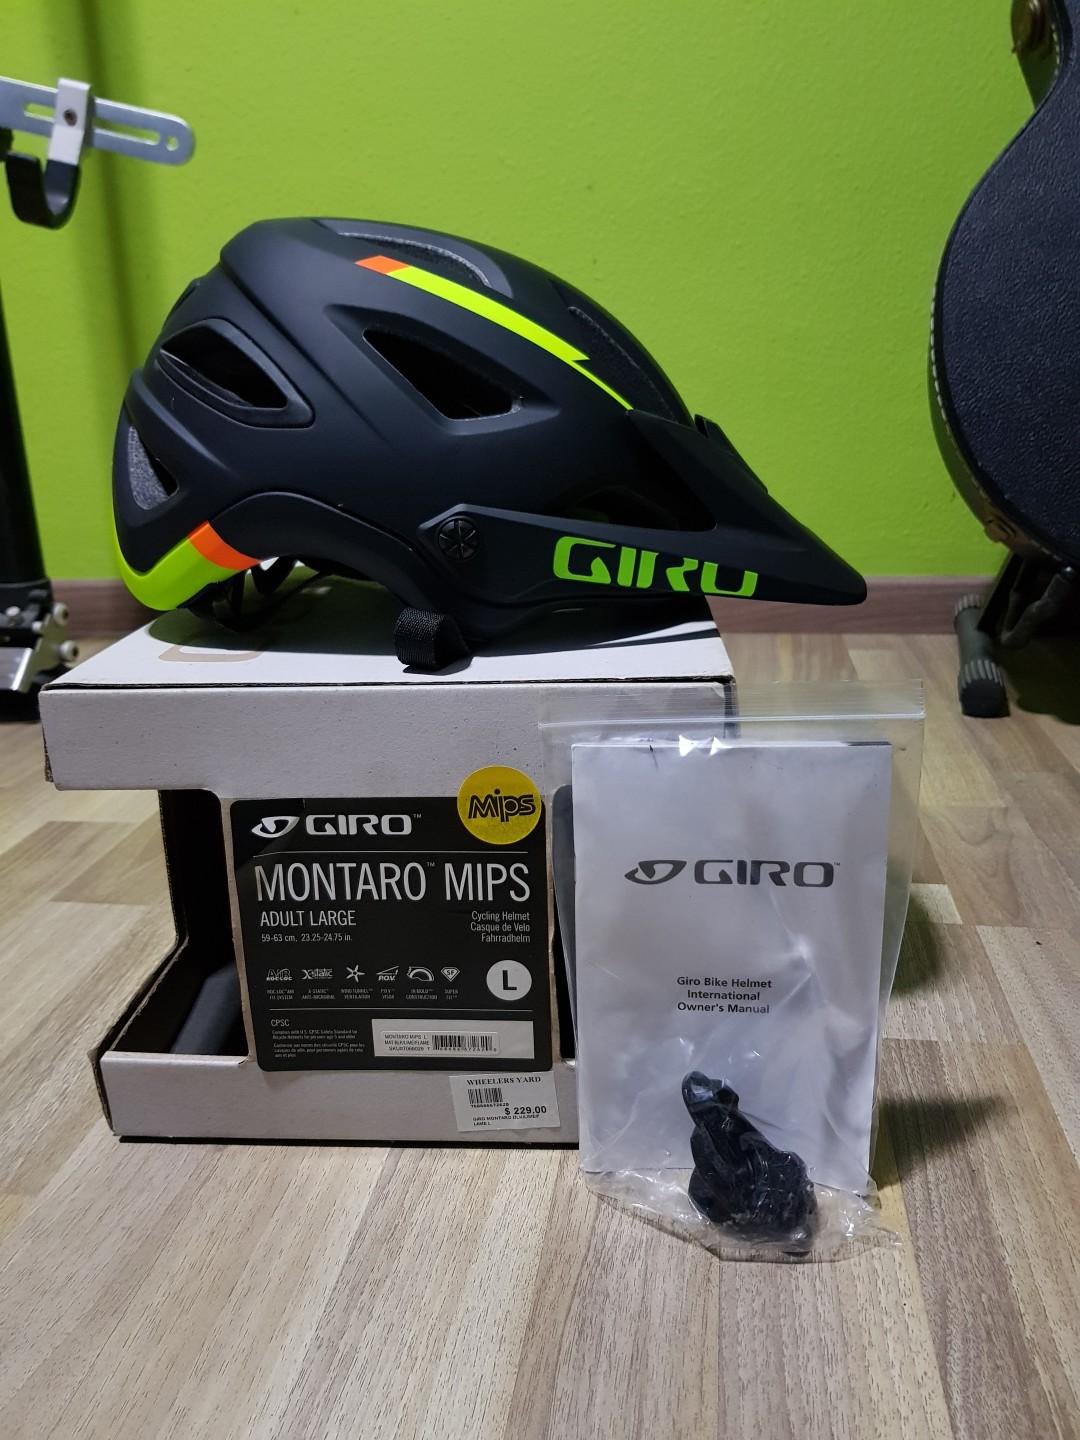 Buy Giro Isode Mips Adult Recreational Bike Helmet Matte Portaro Grey White Red 2021 Universal Adult 54 61 Cm Online At Low Prices In India Amazon In